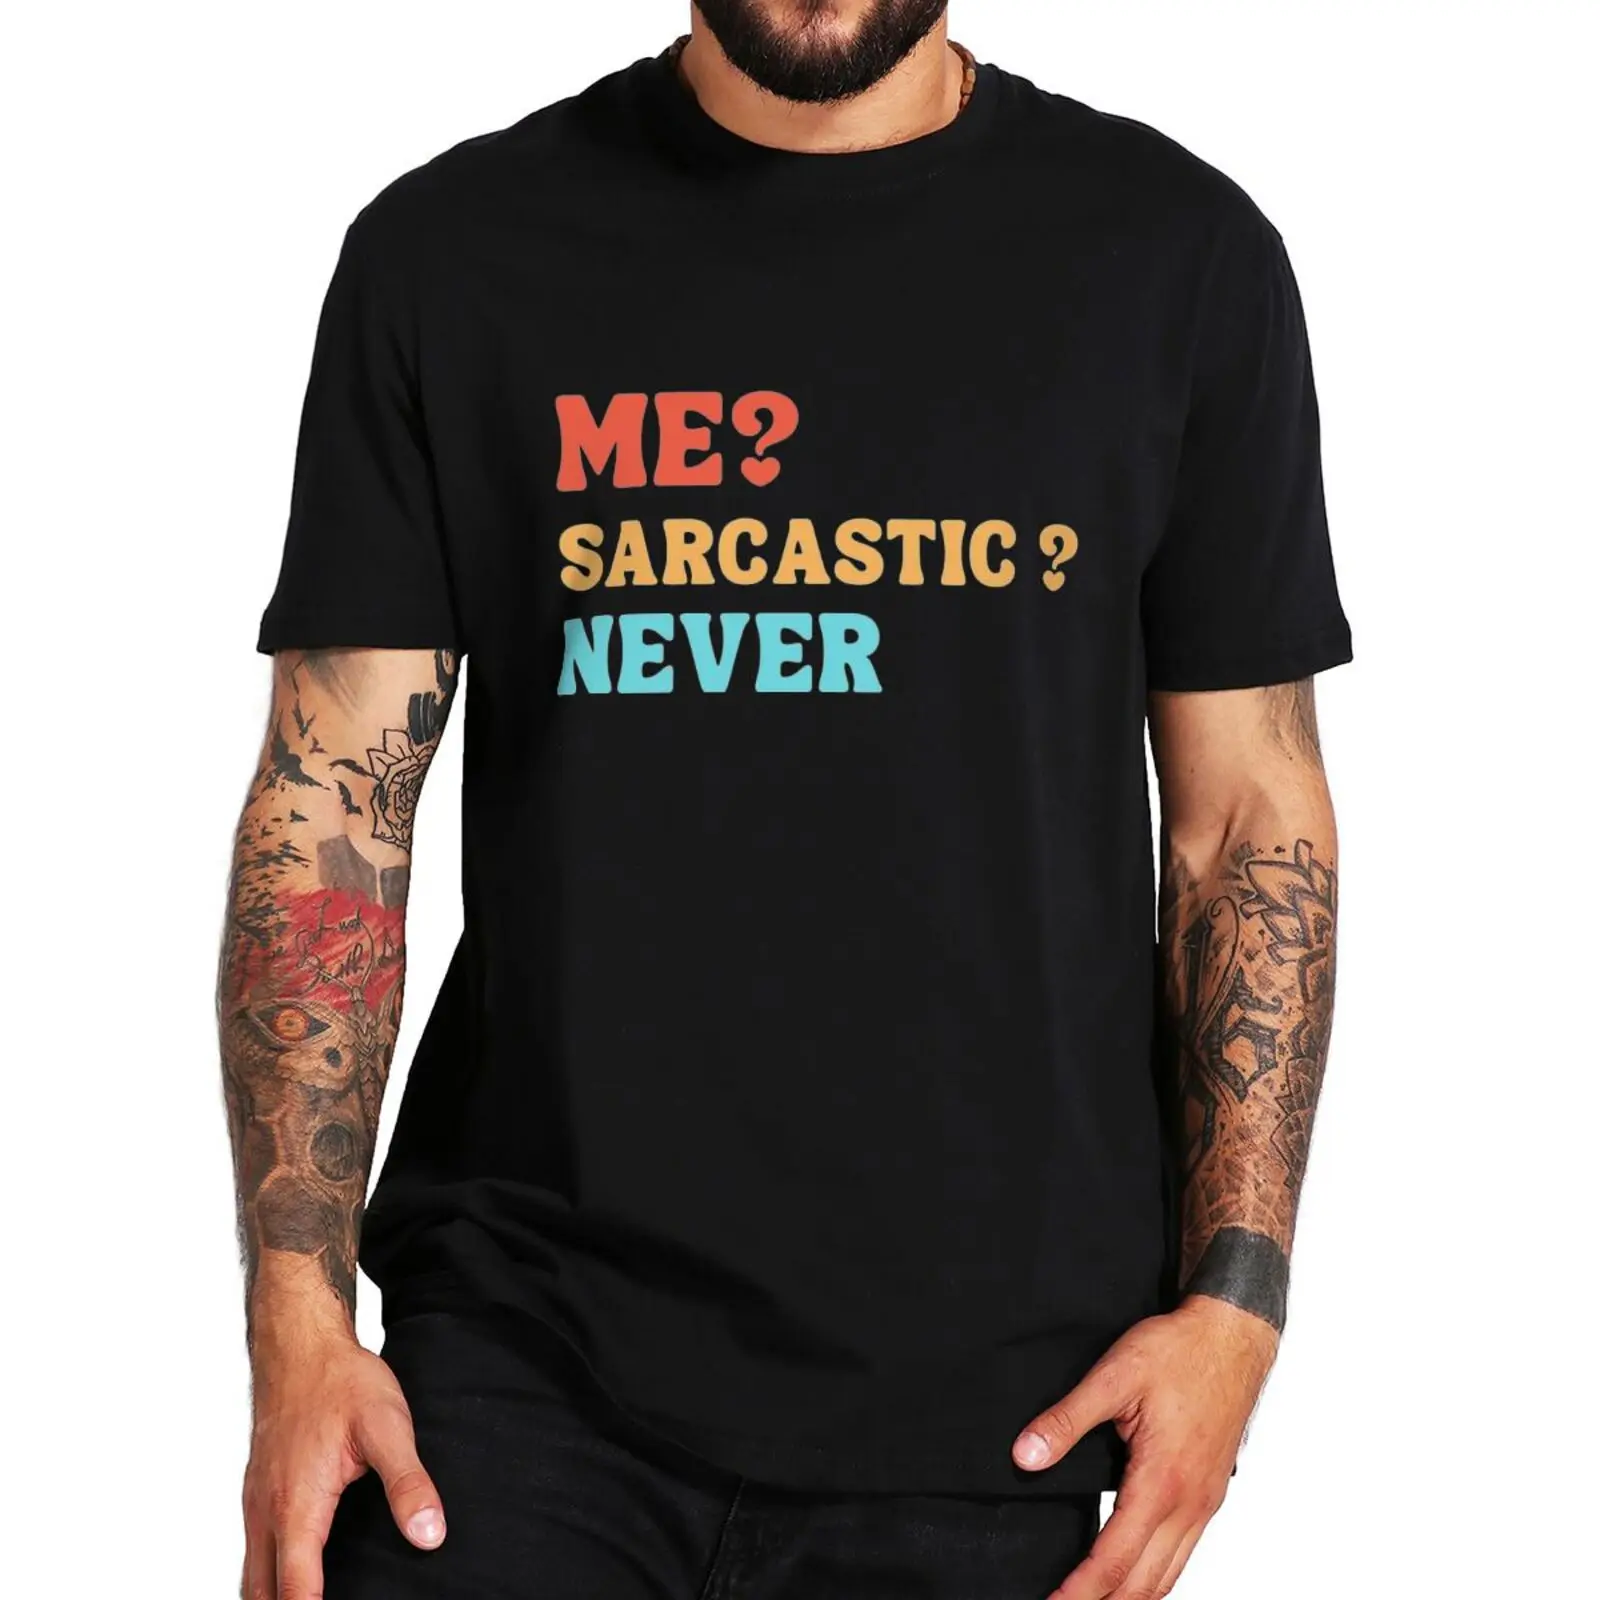 

Me Sarcastic Never T Shirt Funny Black Humor Adult Jokes Tee Tops 100% Cotton Unisex Casual Soft Oversized T-shirt EU Size